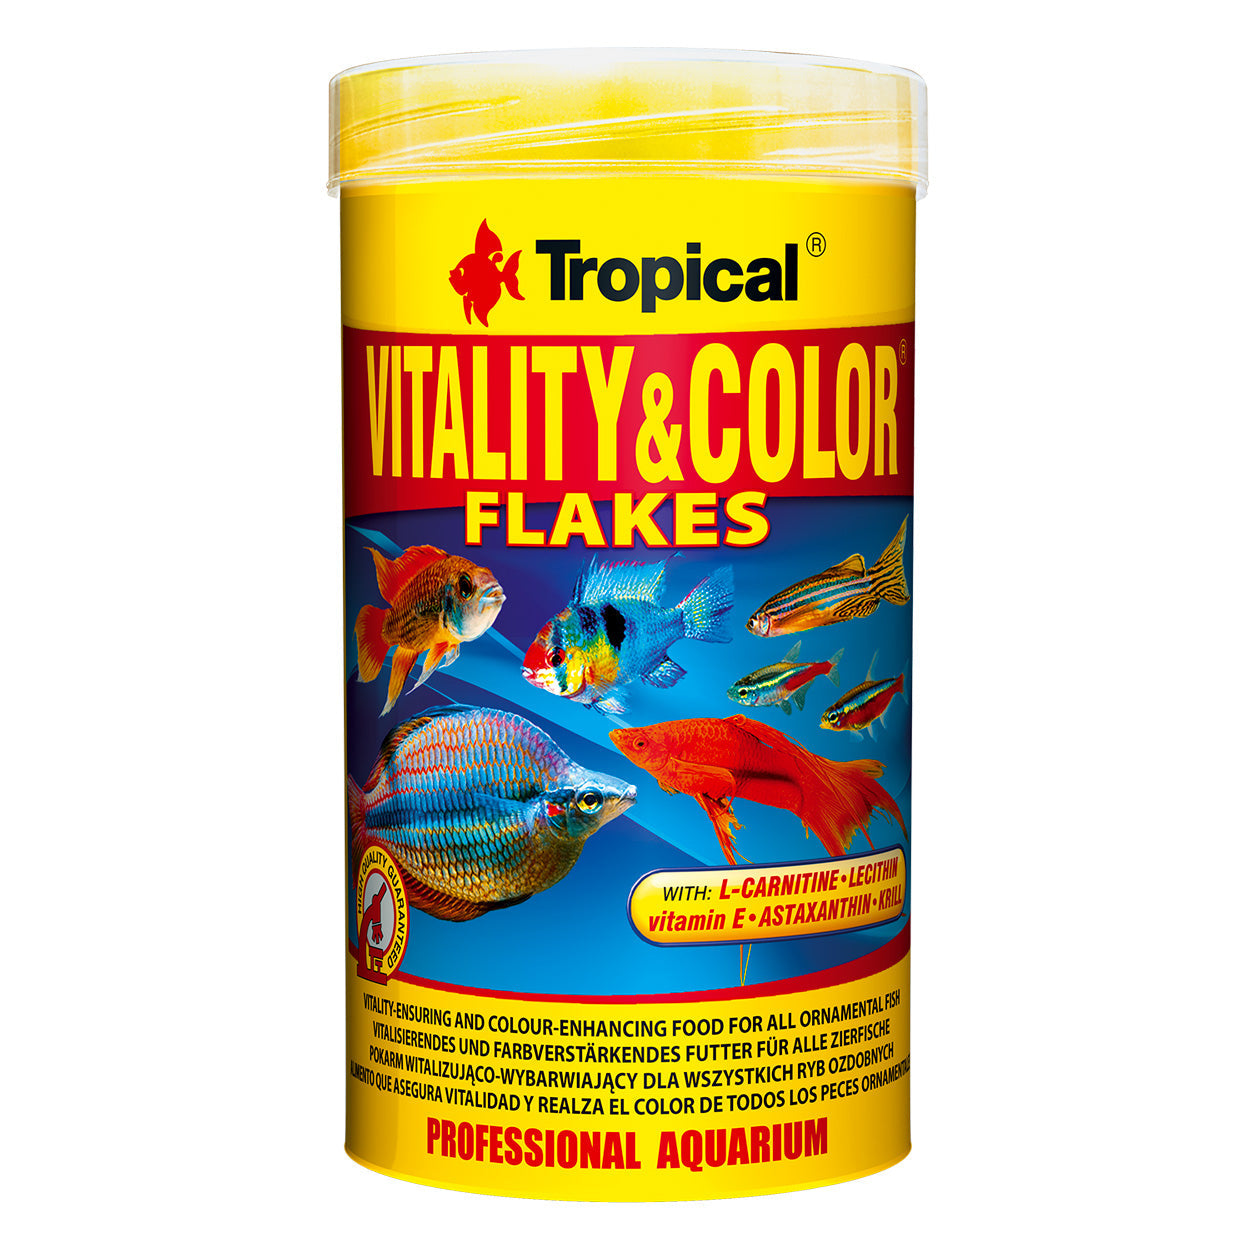 Tropical Vitality & Colour Flakes